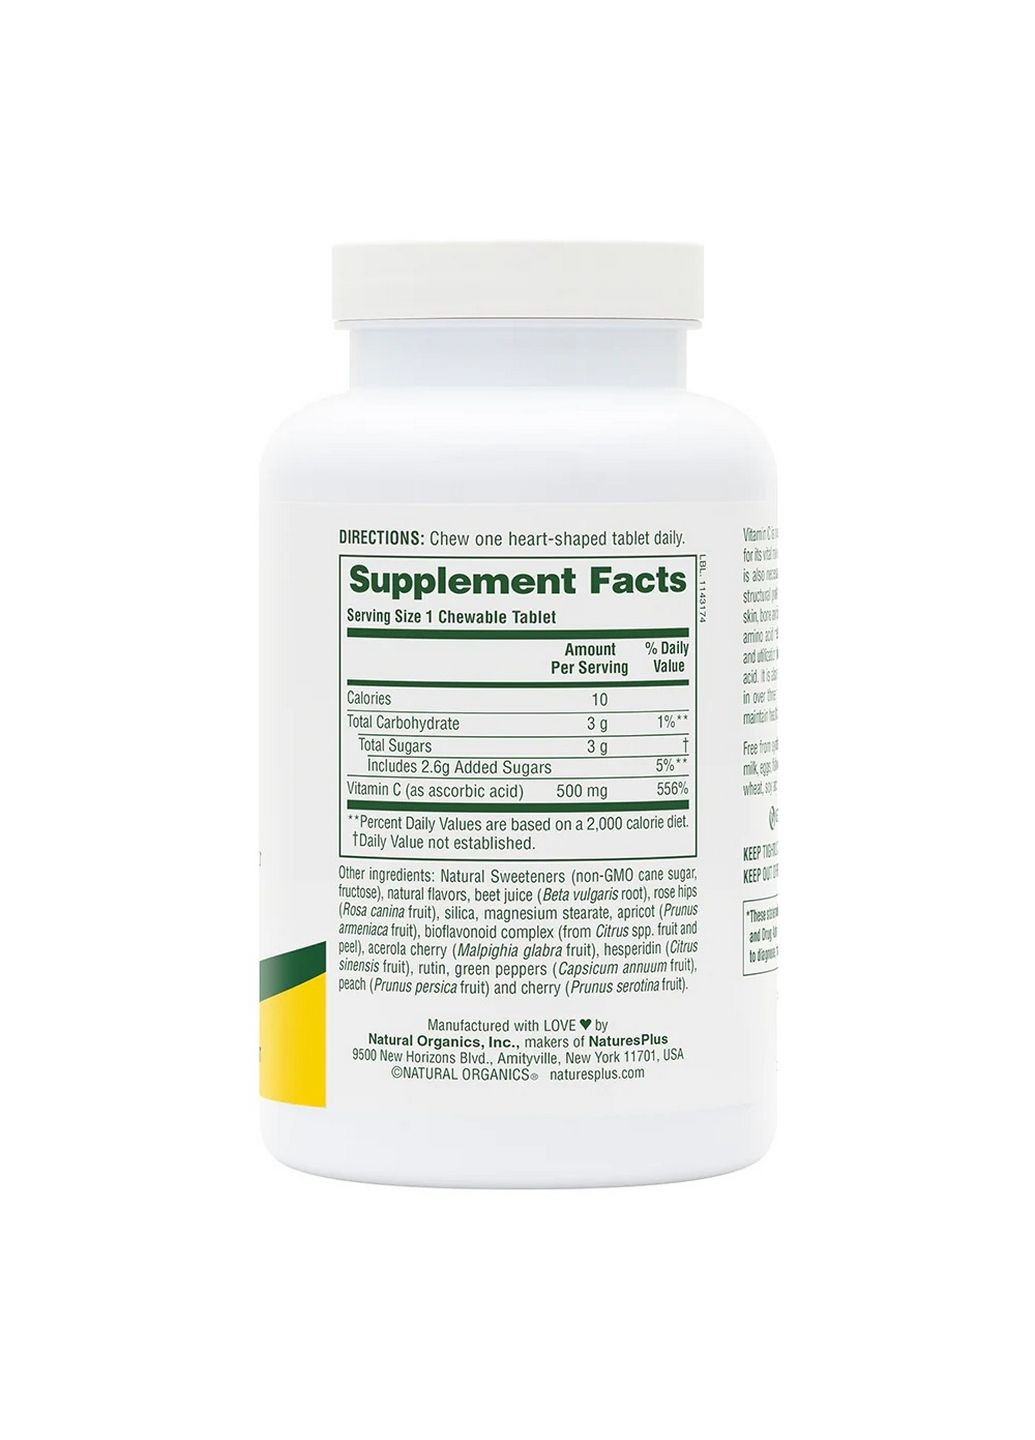 Витамины и минералы Lovites Vitamin C 500 mg, 90 жевательных таблеток Natures Plus (293420907)